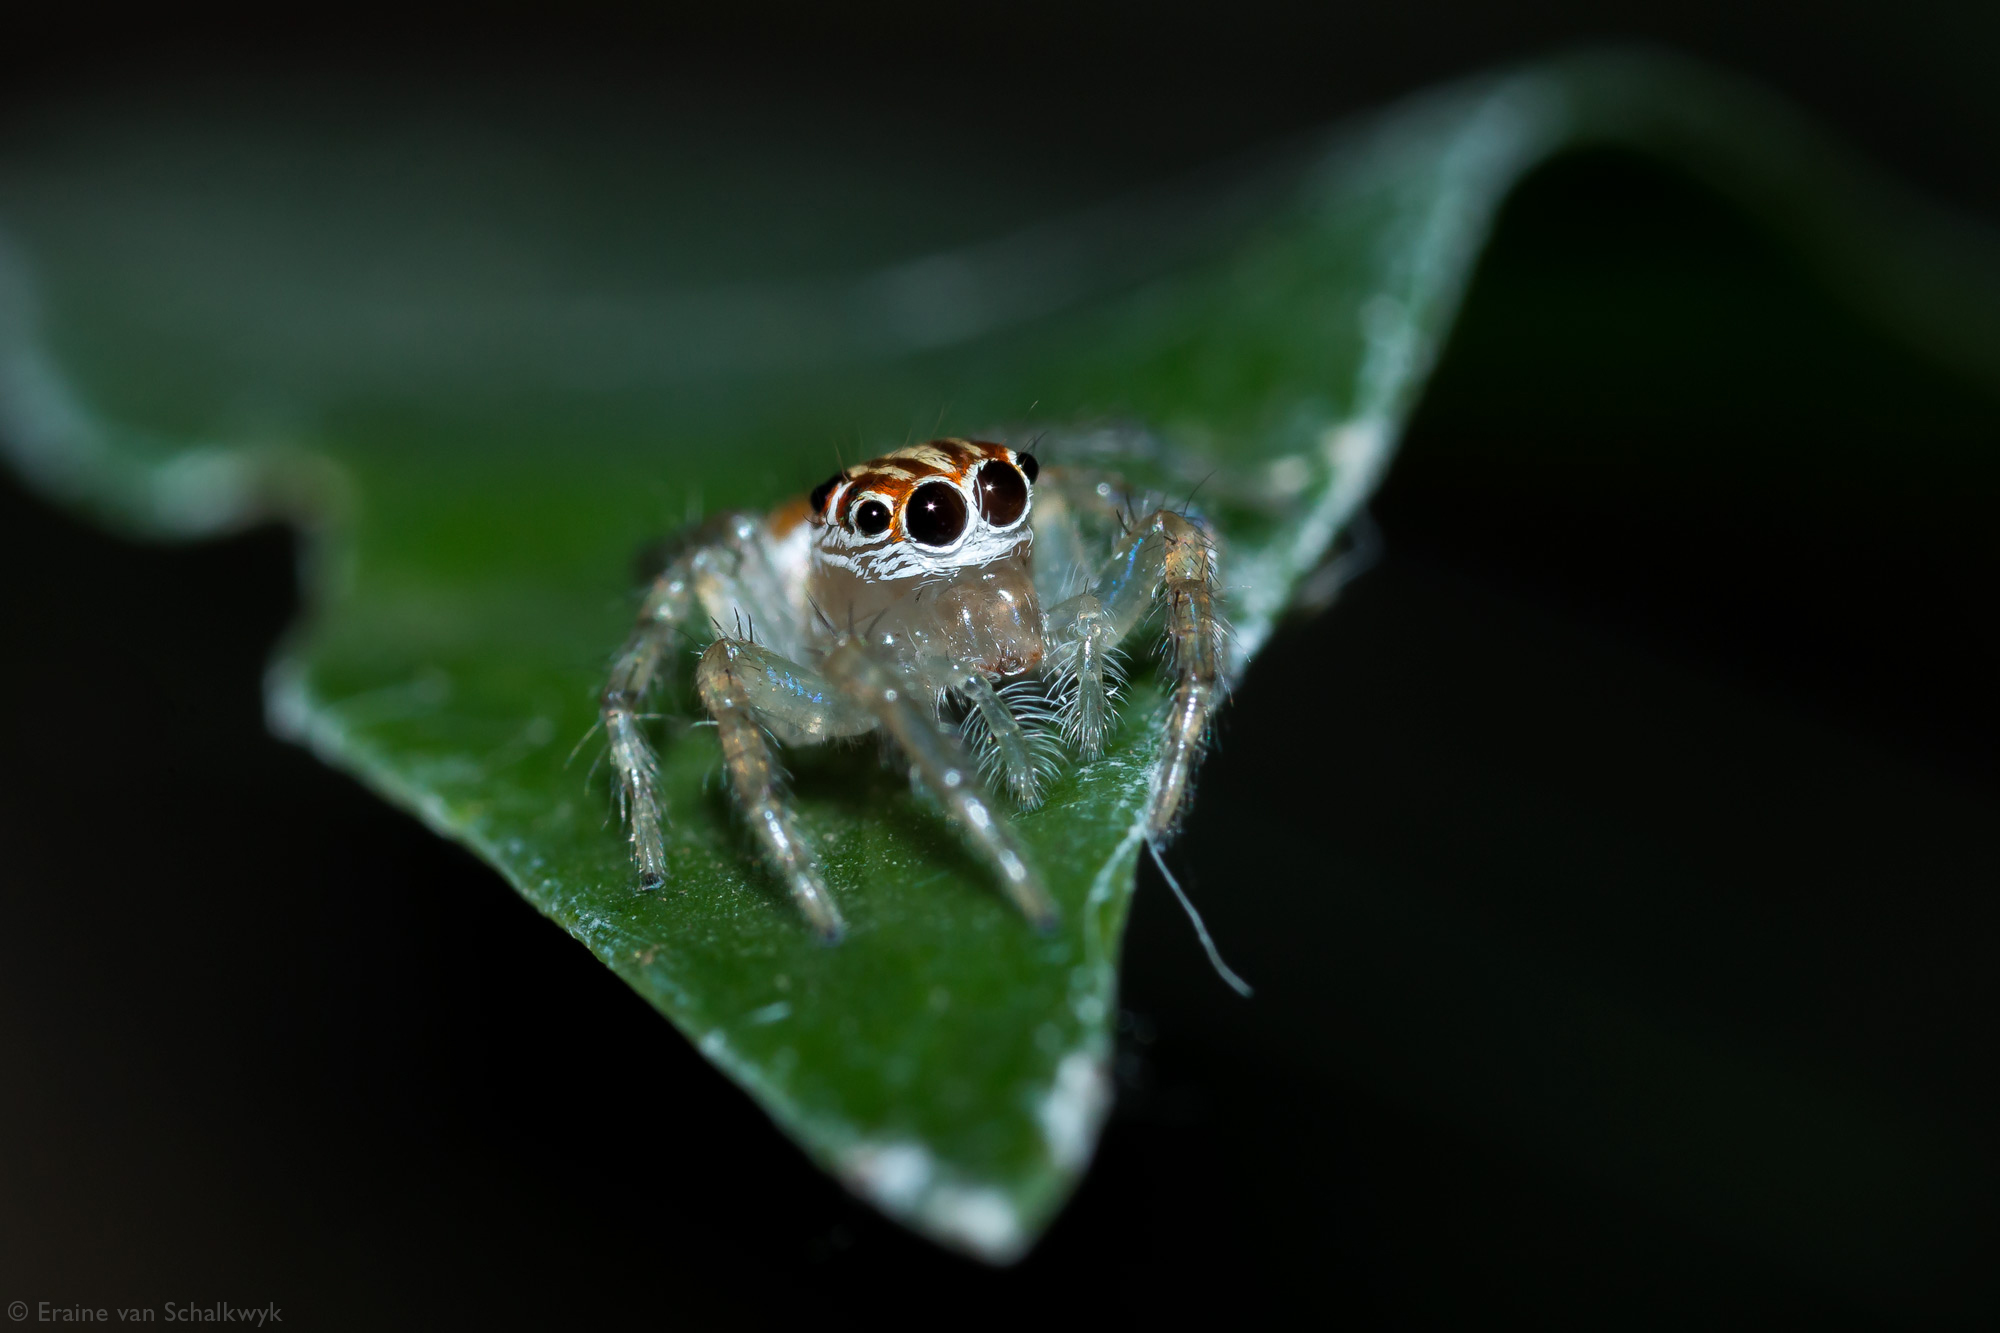 Jumping spider on edge of leaf, arachnid, macro photography